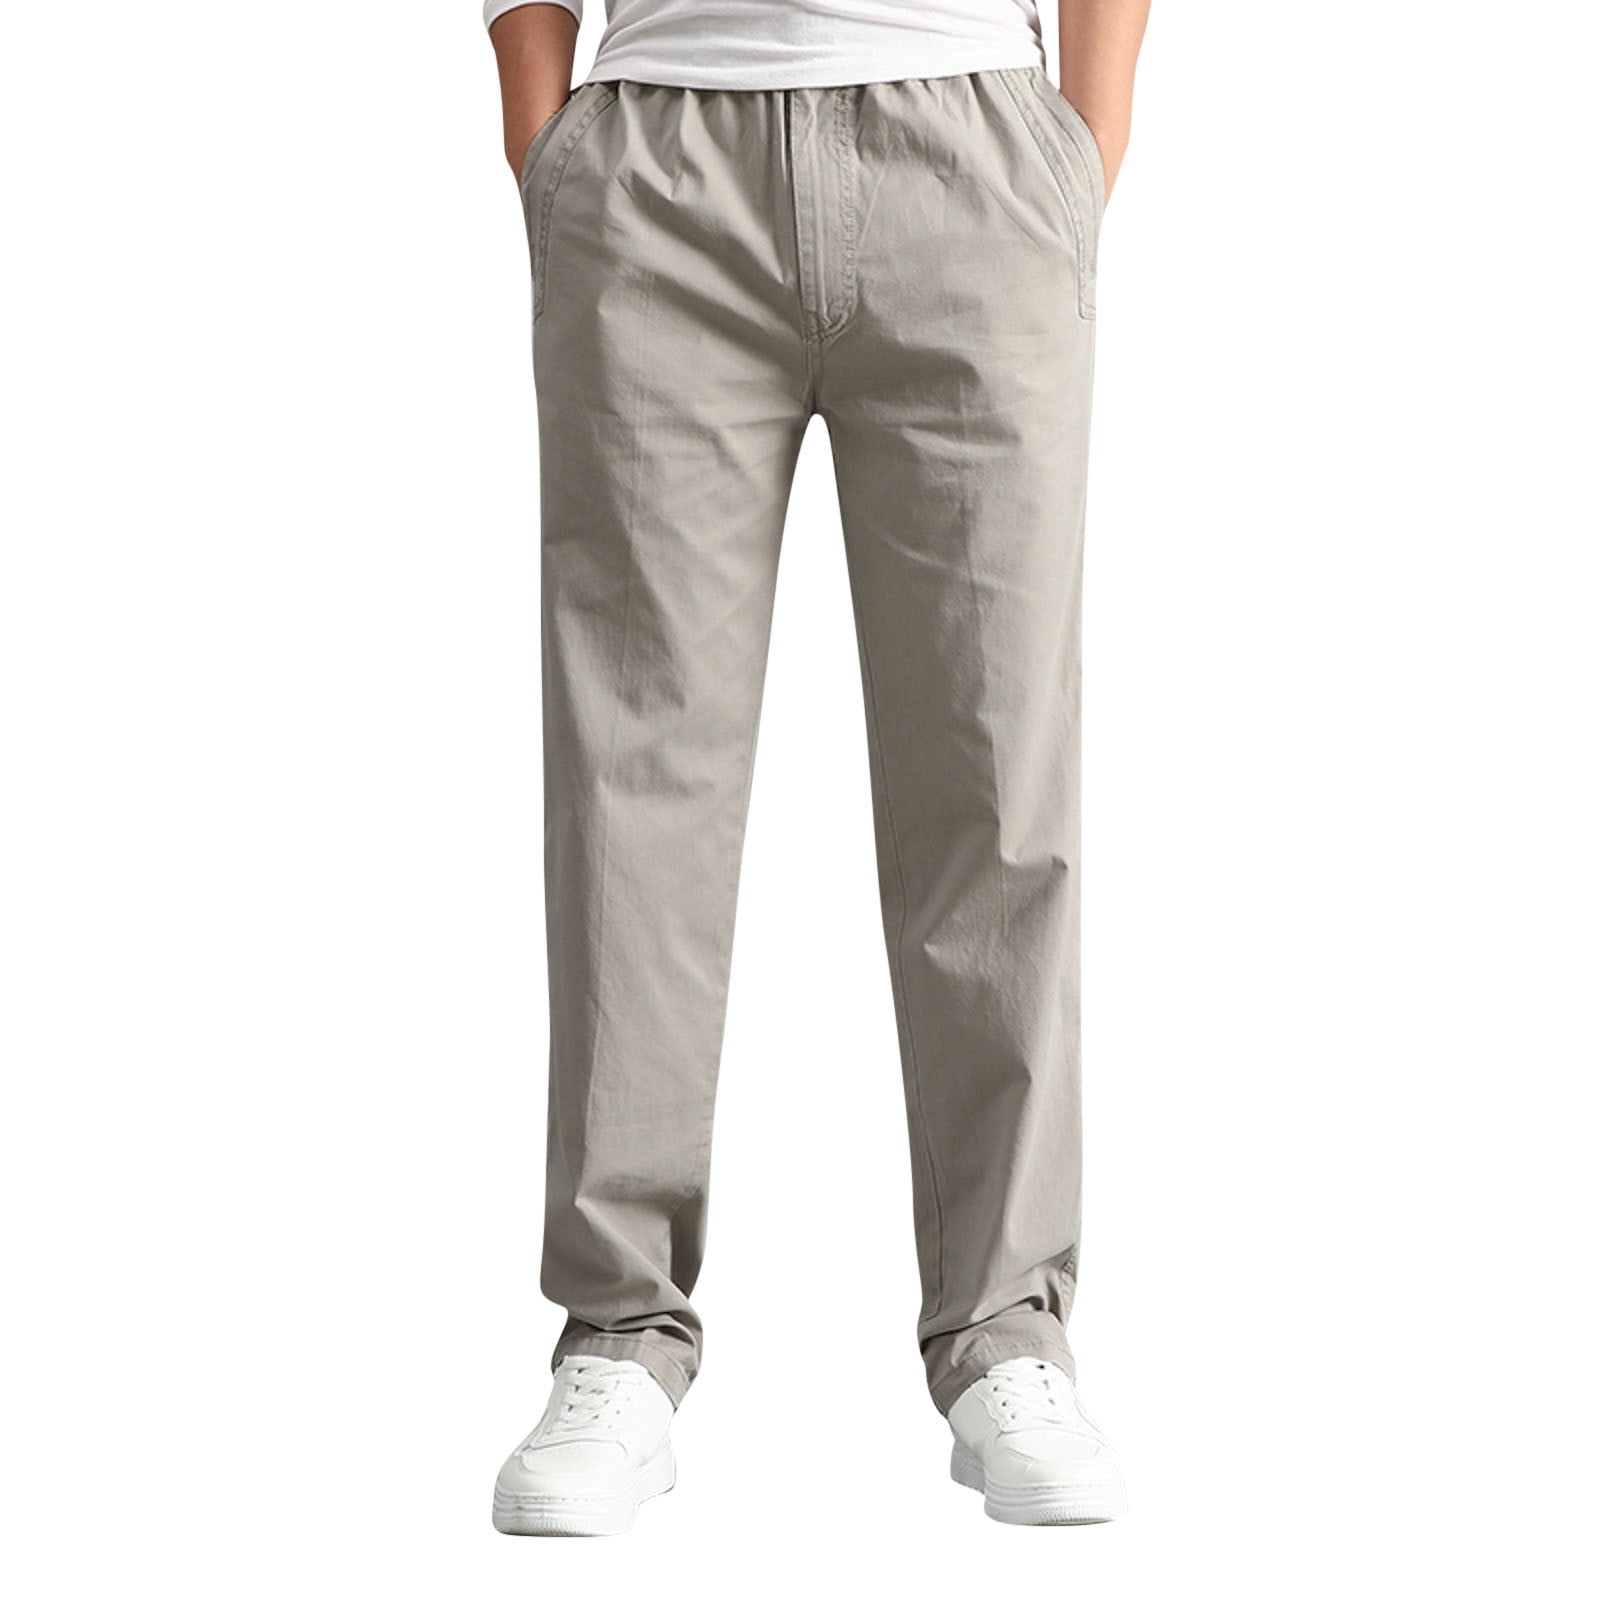 PMUYBHF Men's Cargo Pants Size 36X32 Mens Fashion Casual Loose